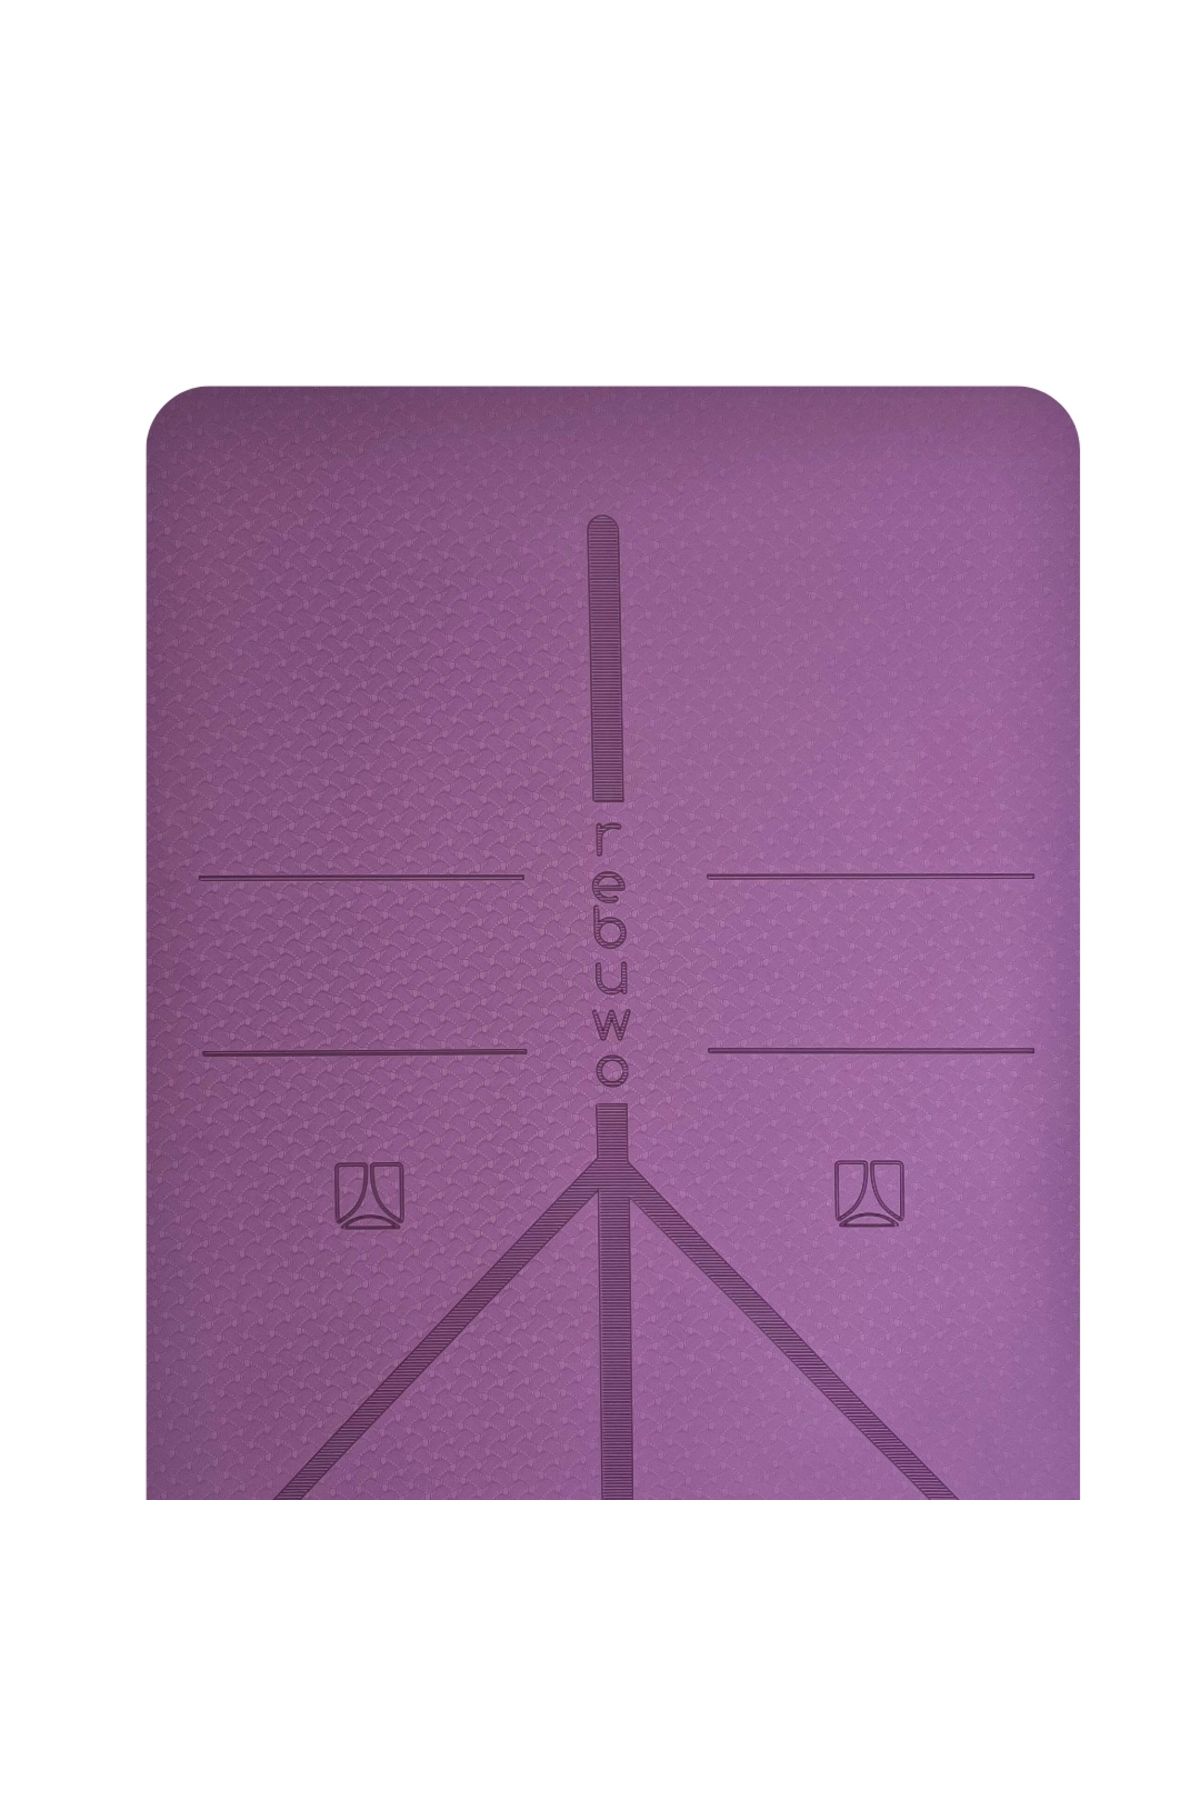 Rebuwo Tpe Hizalama Tasarımlı Kaydırmaz Yoga Mat Pilates Minderi 5mm 183 X 61 Cm